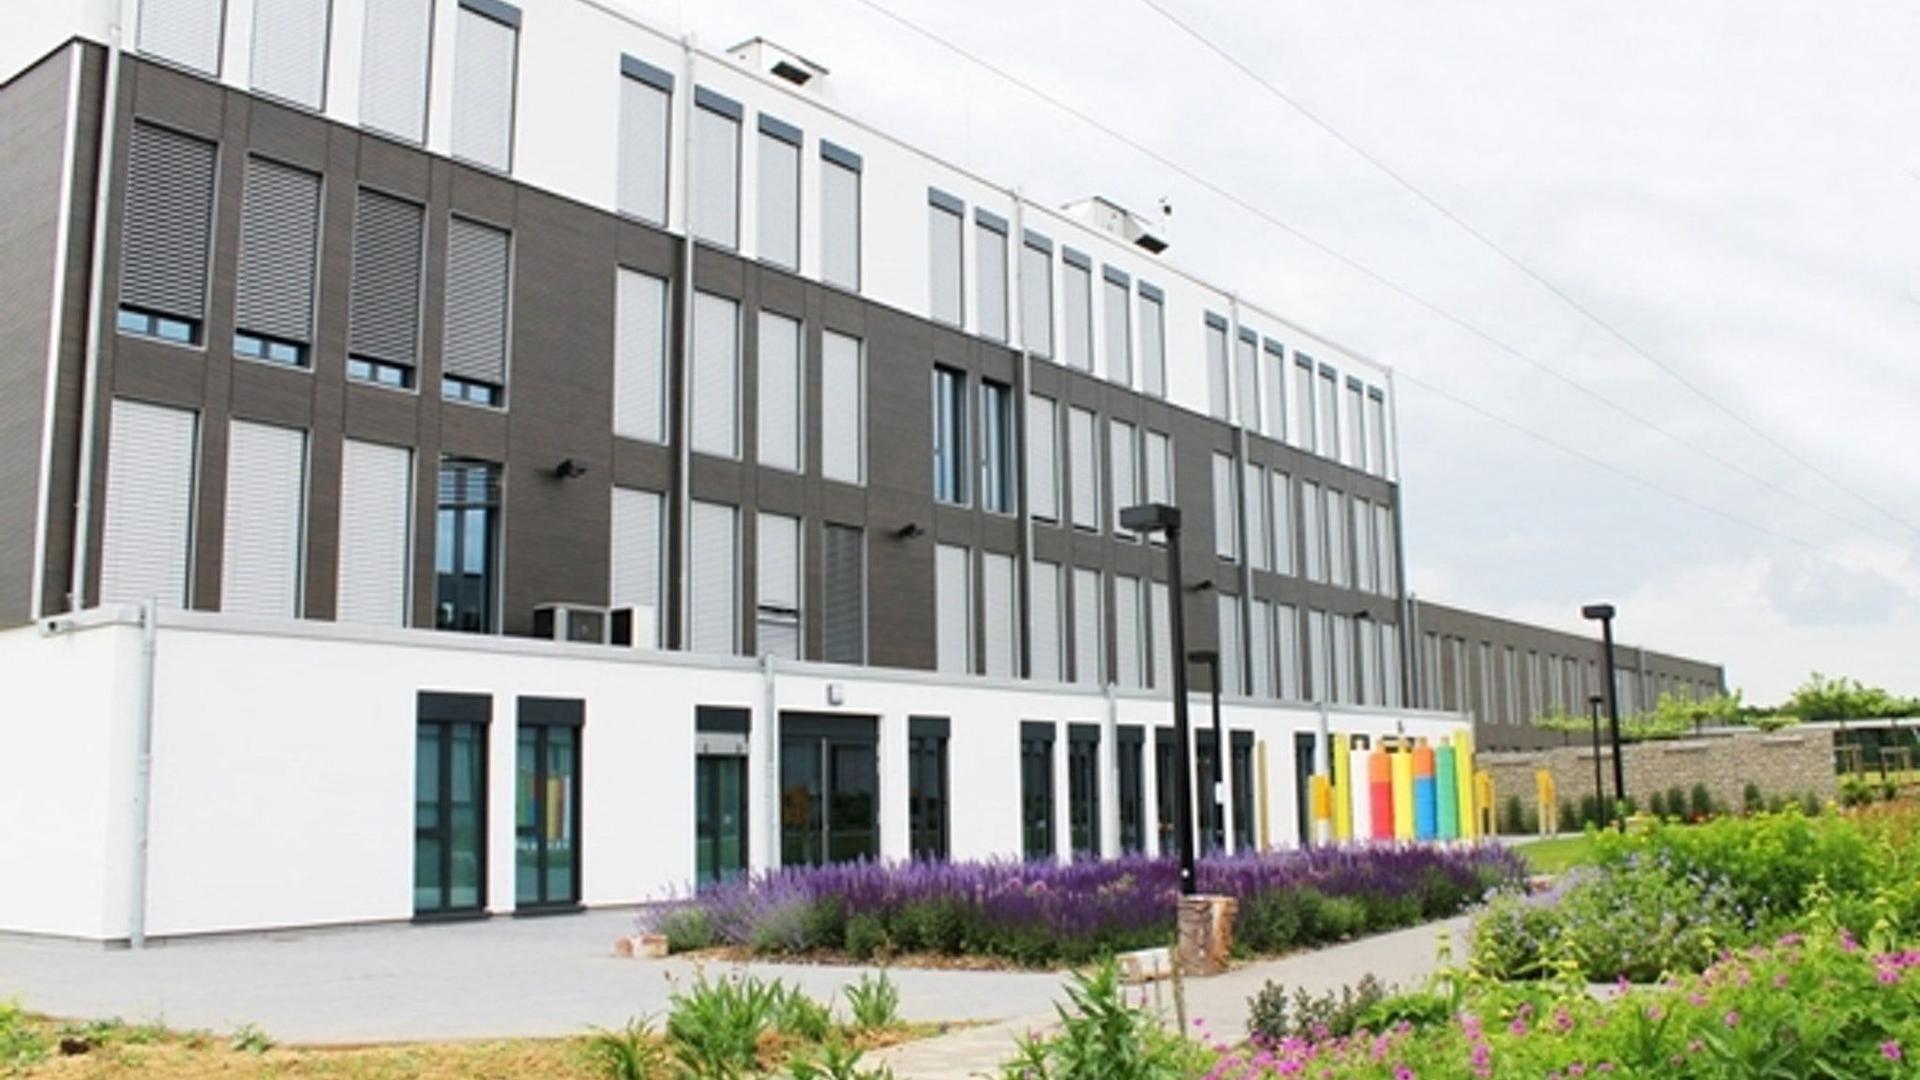 St. George's International School is based in Hamm on Rue des Peupliers Photo: St. George's International School